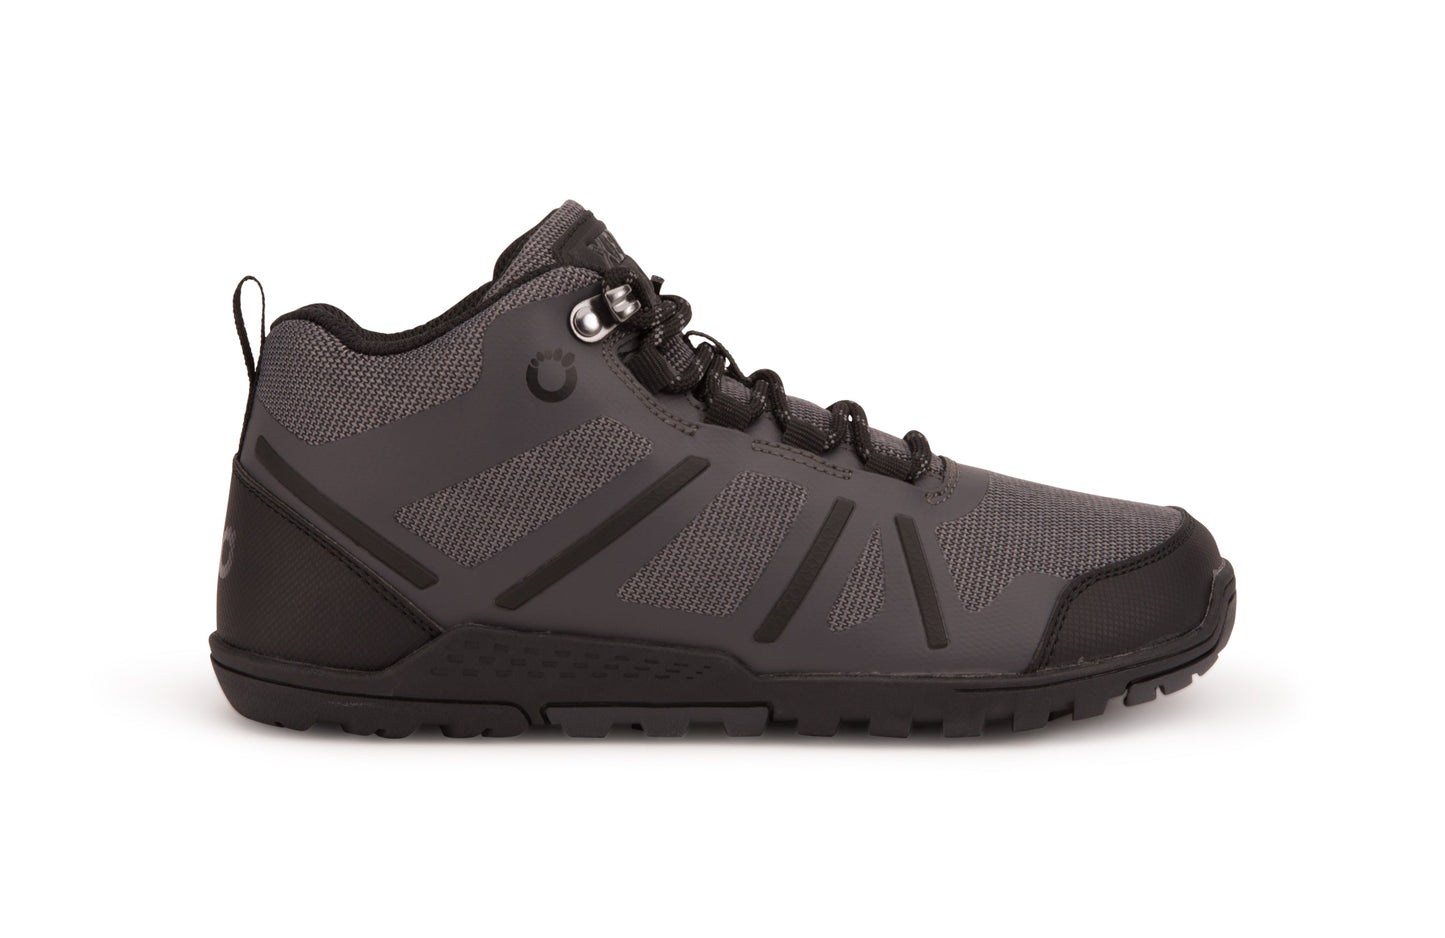 Xero Shoes Daylite Hiker Fusion Womens barfods vandrestøvler til kvinder i farven asphalt, yderside